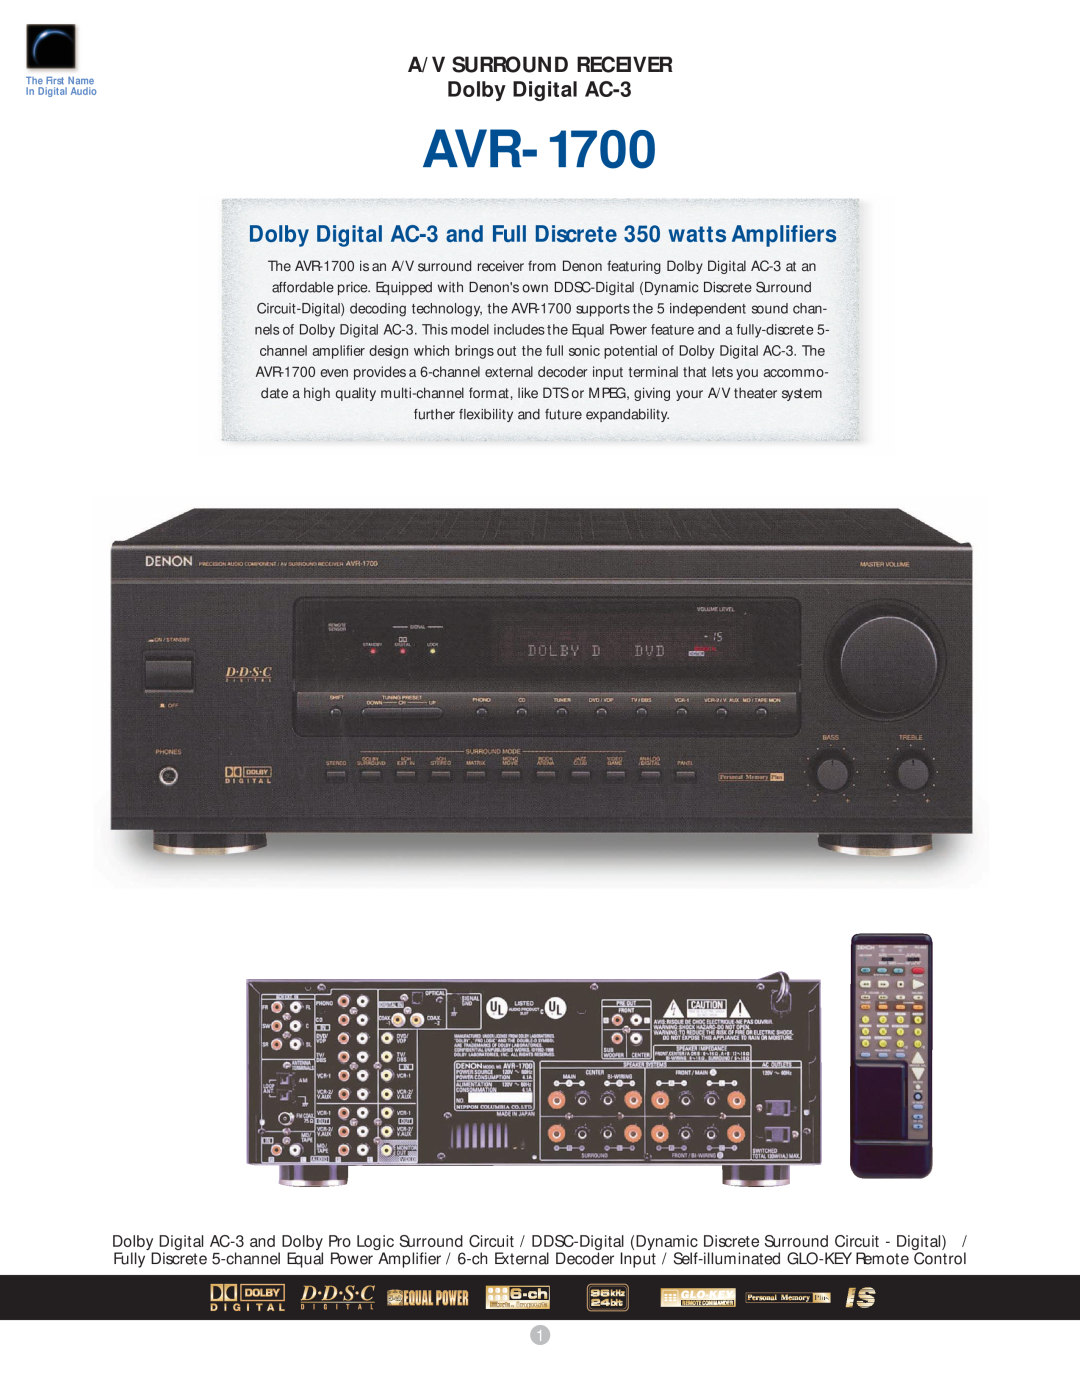 Denon AVR-1700 manual A/V SURROUND RECEIVER Dolby Digital AC-3 